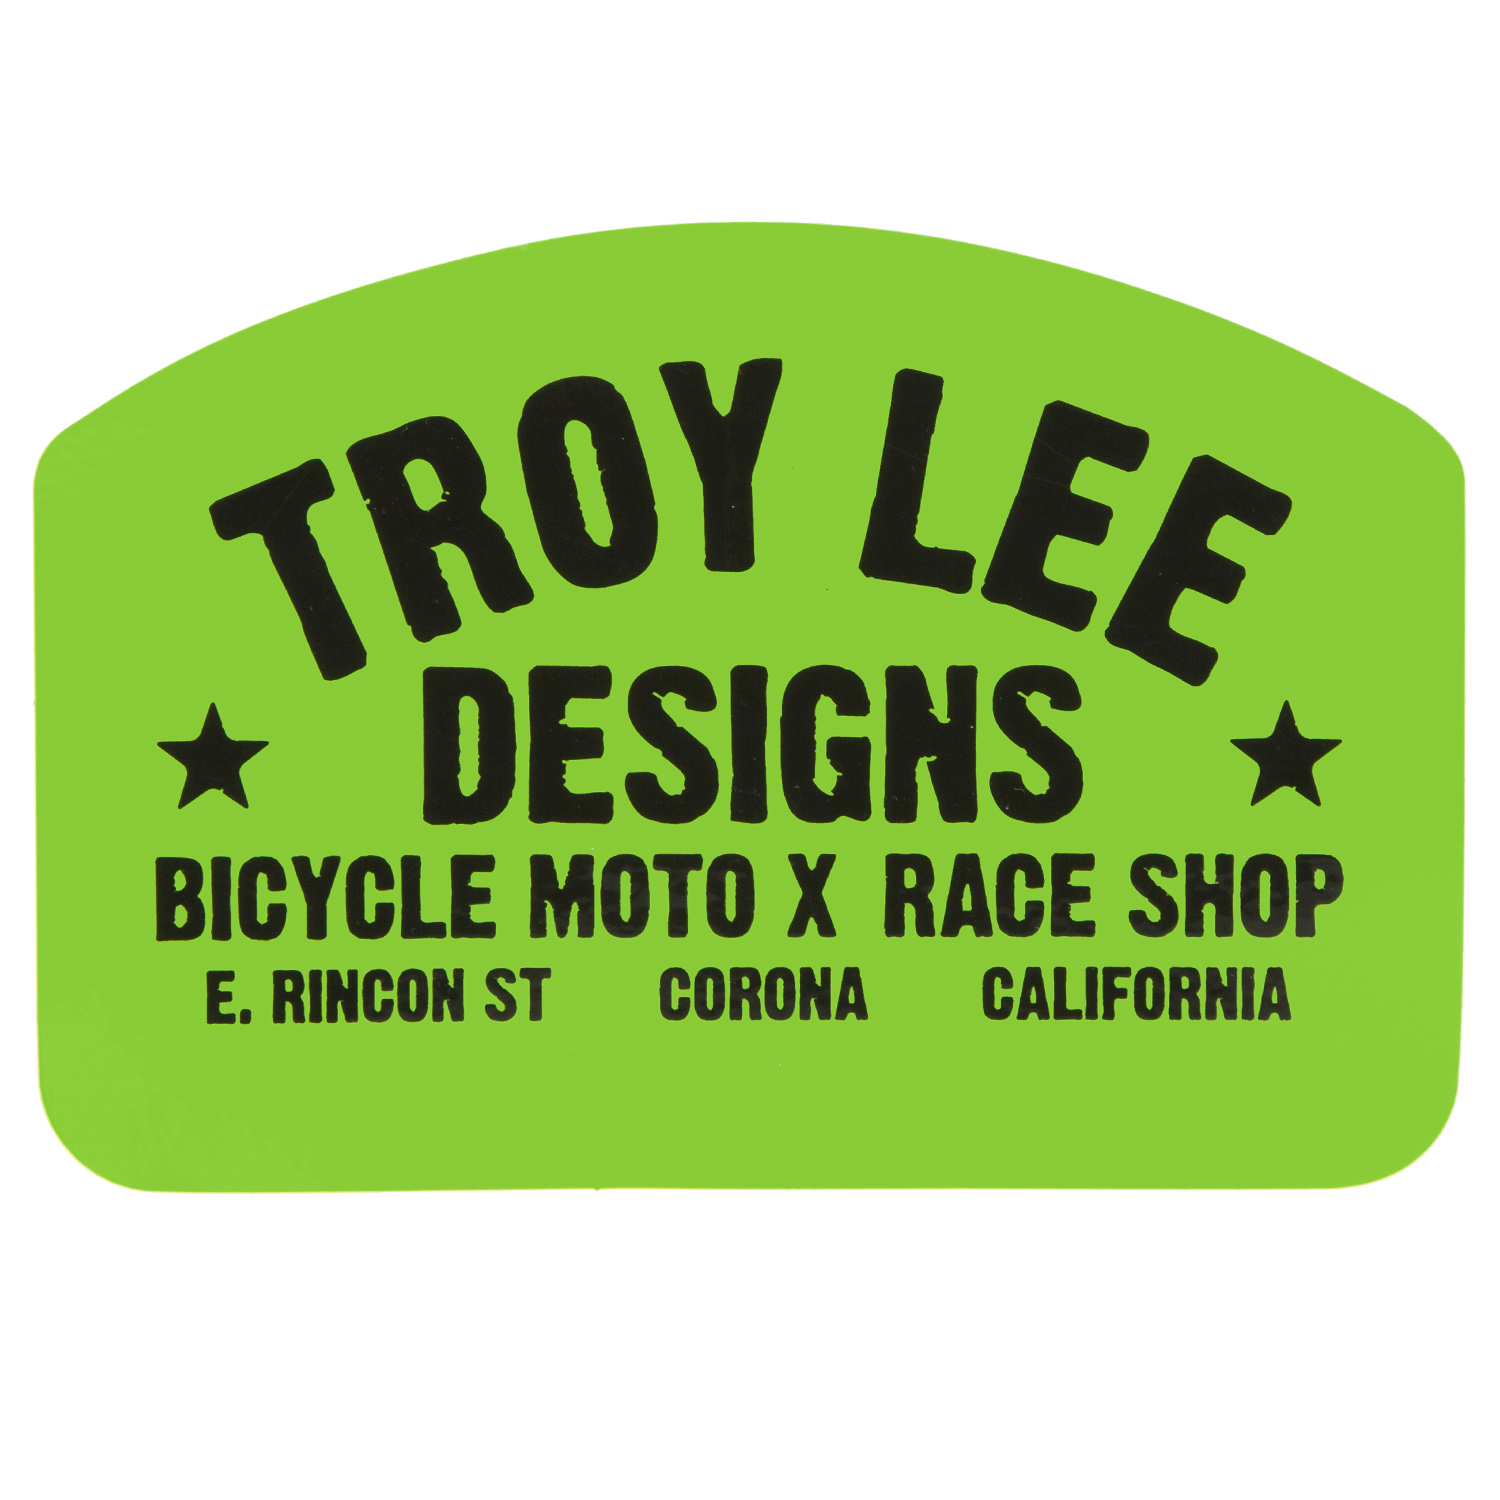 Troy Lee Designs Adesivi Race Shop Green/Black - 3.5 inches